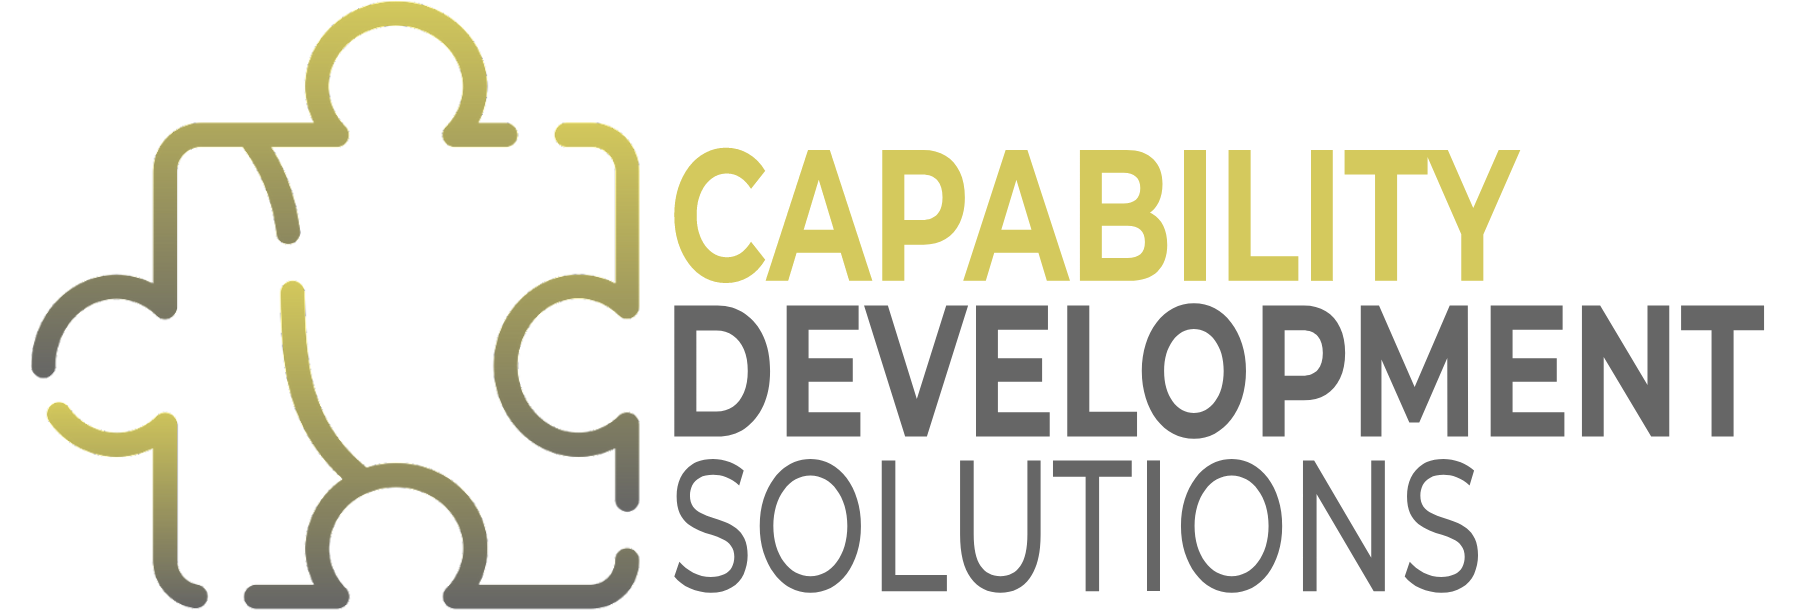 Capability Development Solutions